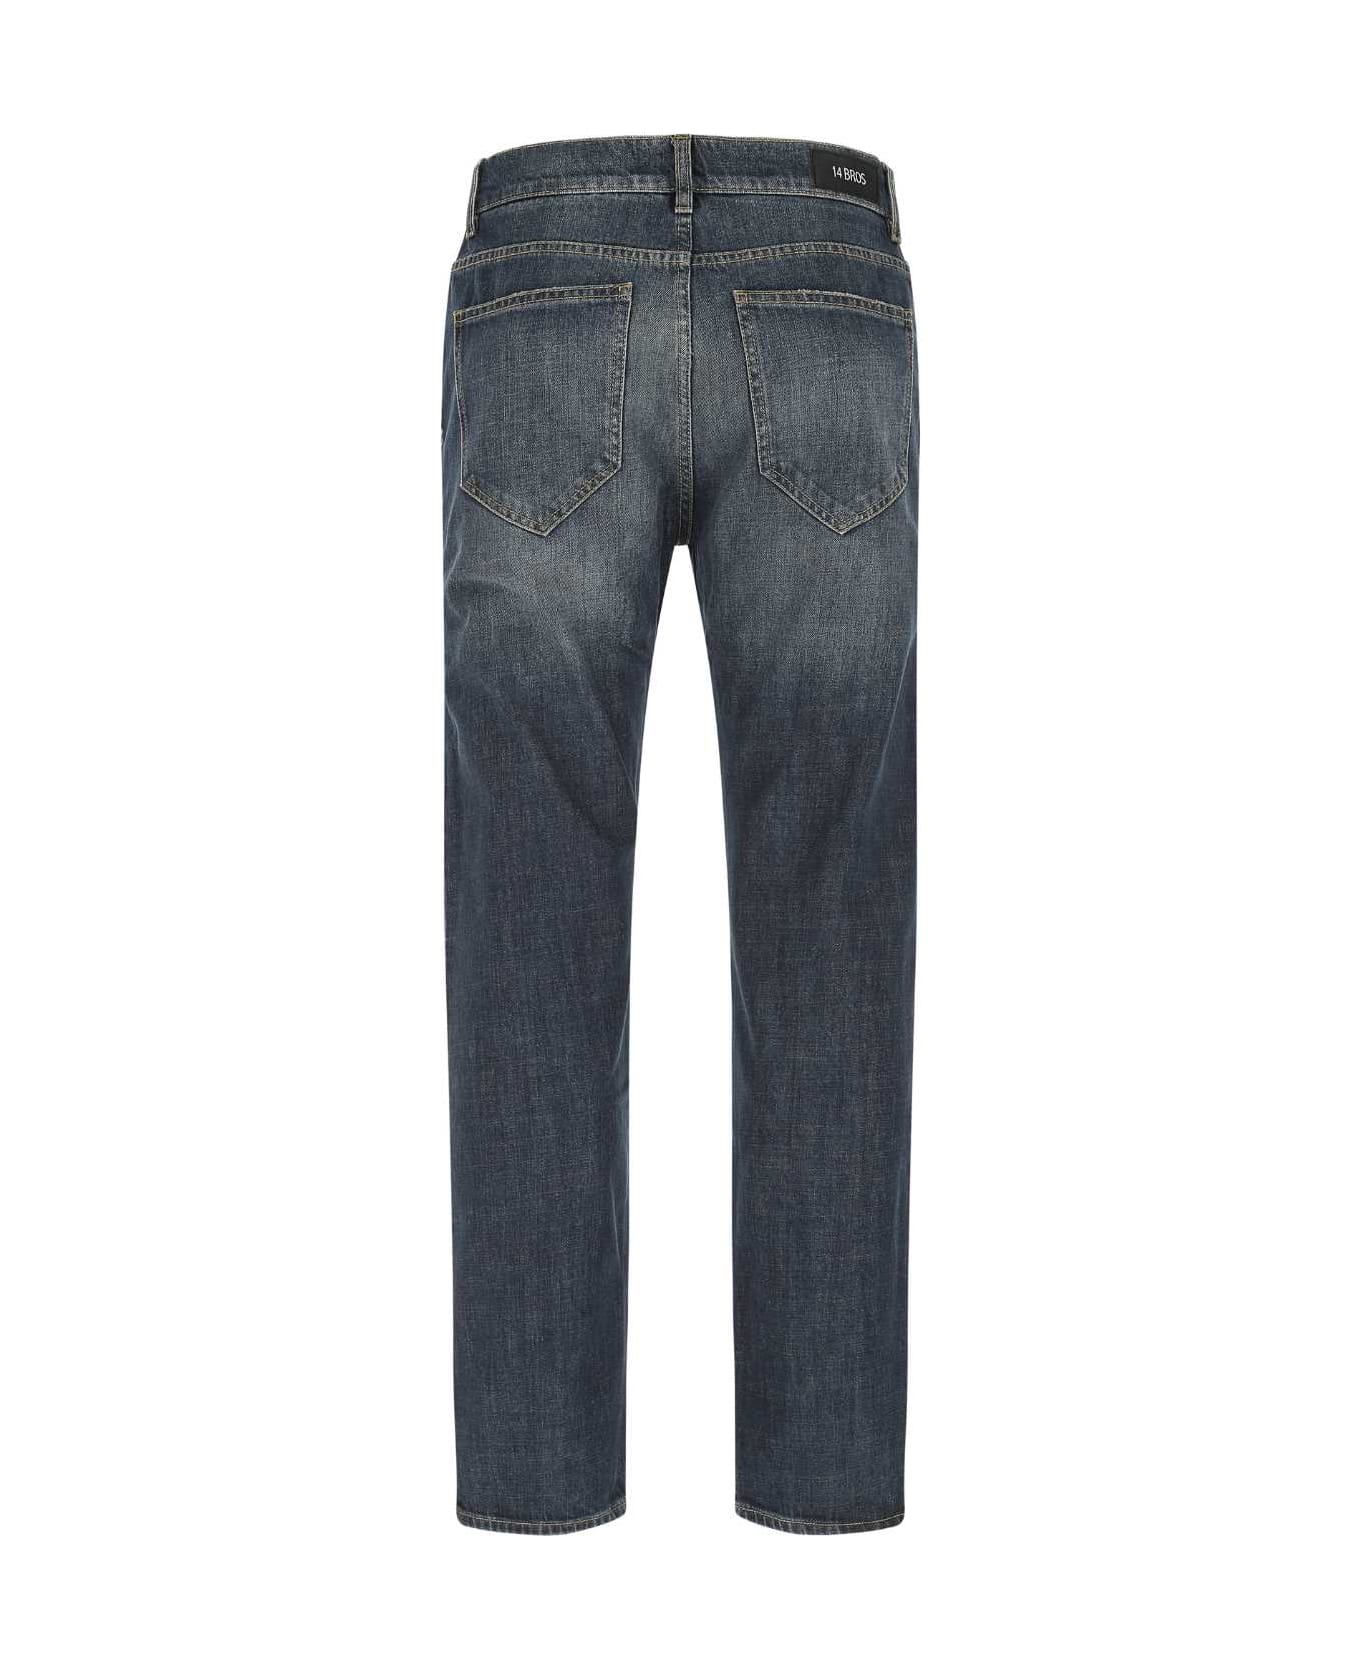 14 Bros Denim Cheswick Jeans - 9149